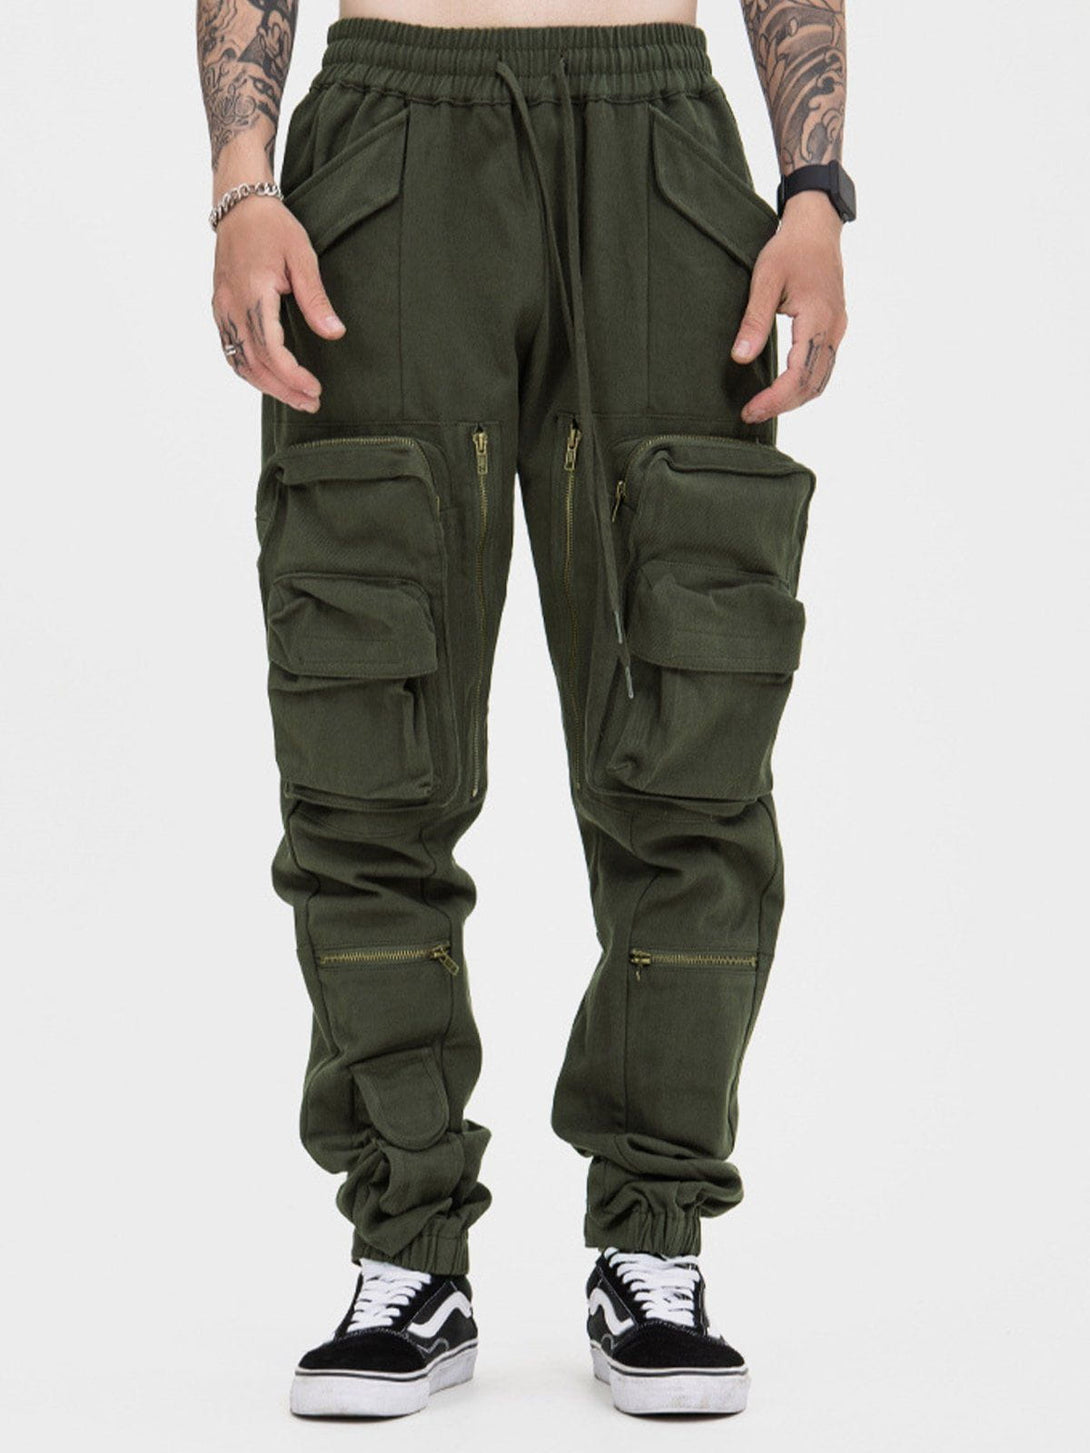 Majesda® - Multi Pocket Technical Cargo Pants outfit ideas streetwear fashion